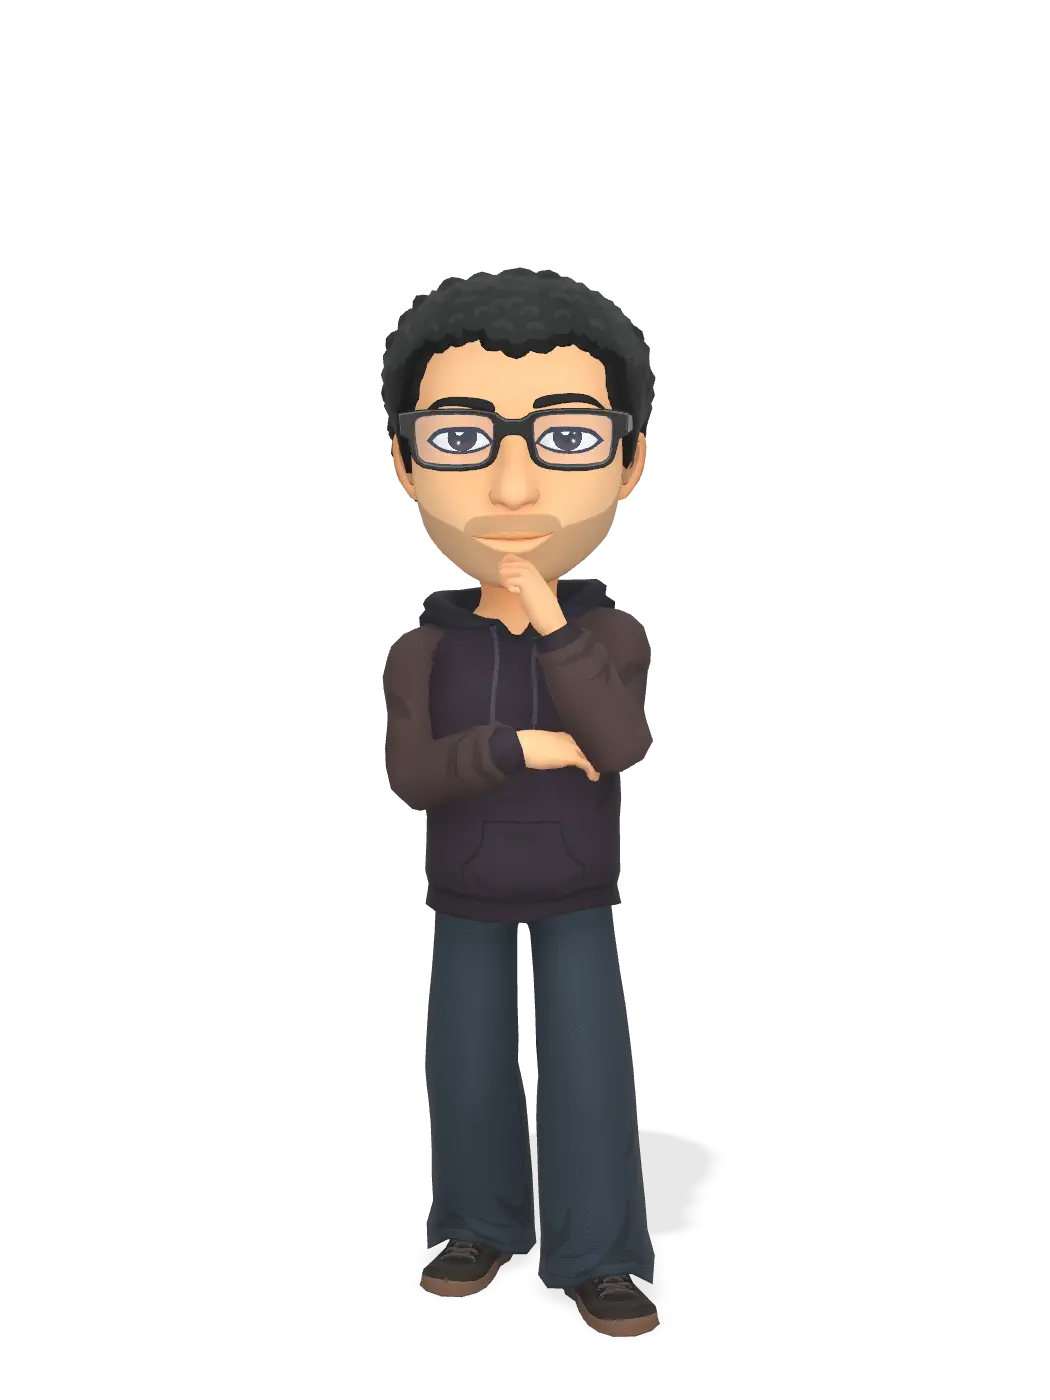 3D Bitmoji for chicuasuque23 avatar